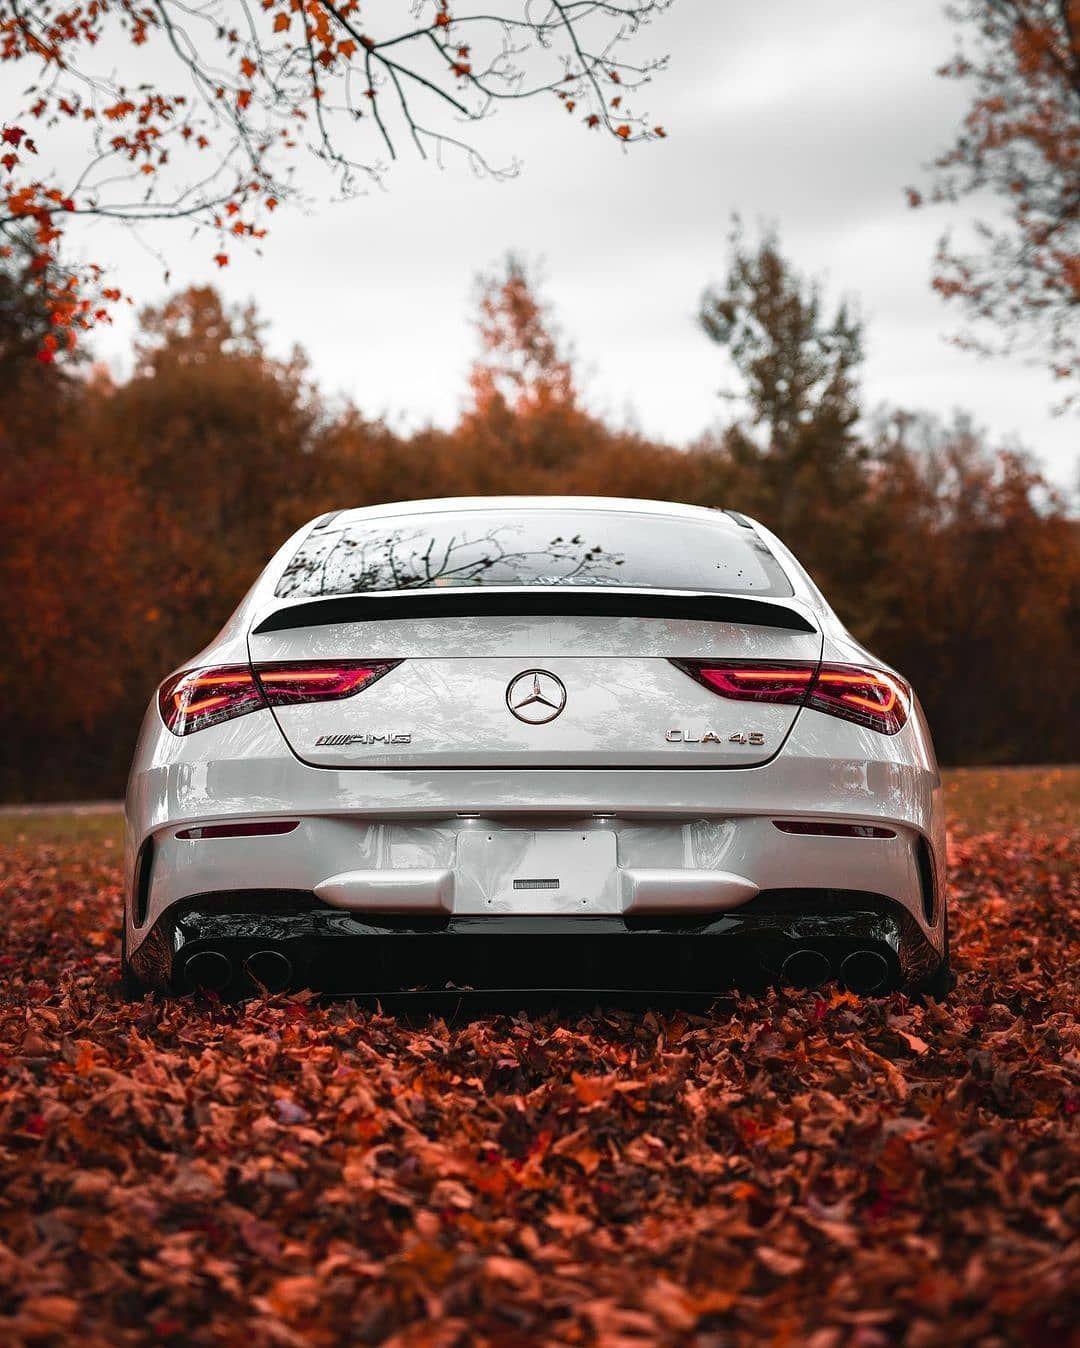 AMG Mercedes Benzs Instagram post CLA45 AMG